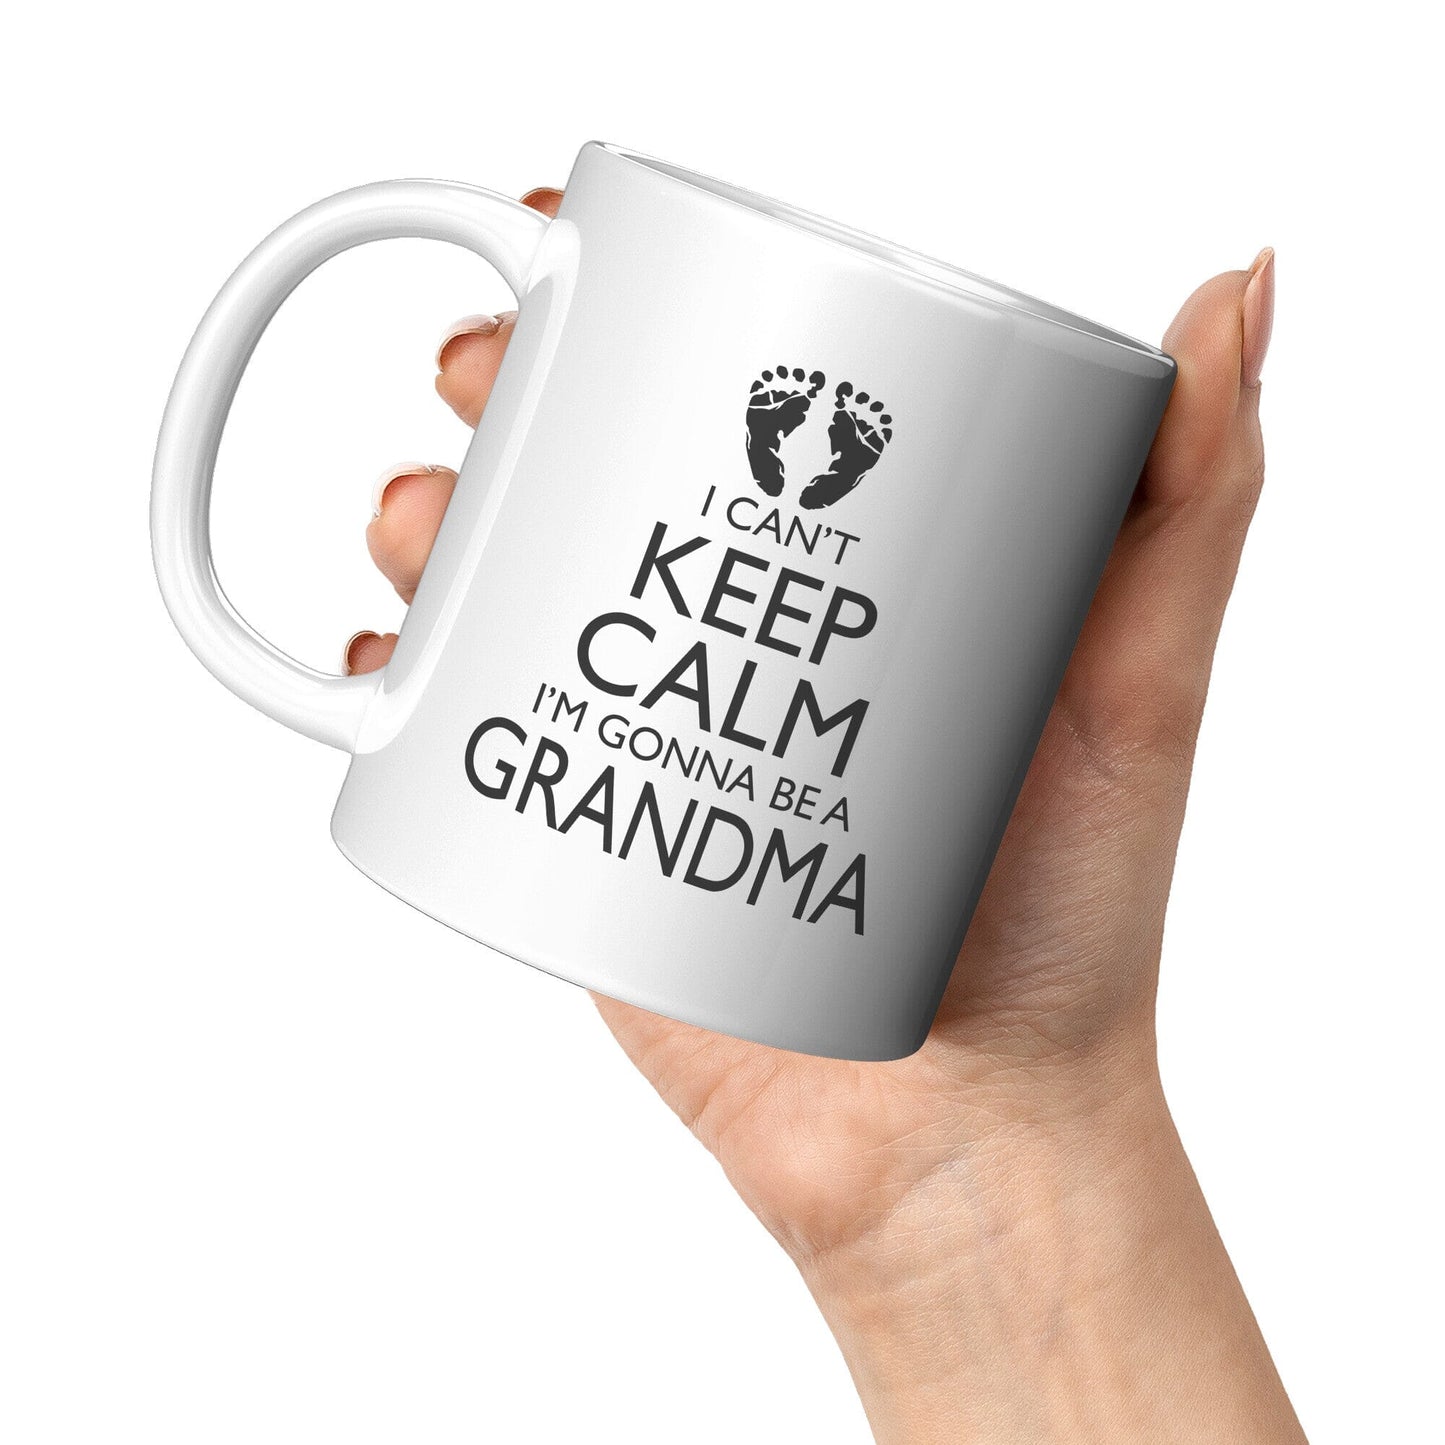 Keep Calm - Grandma Coffee Mug